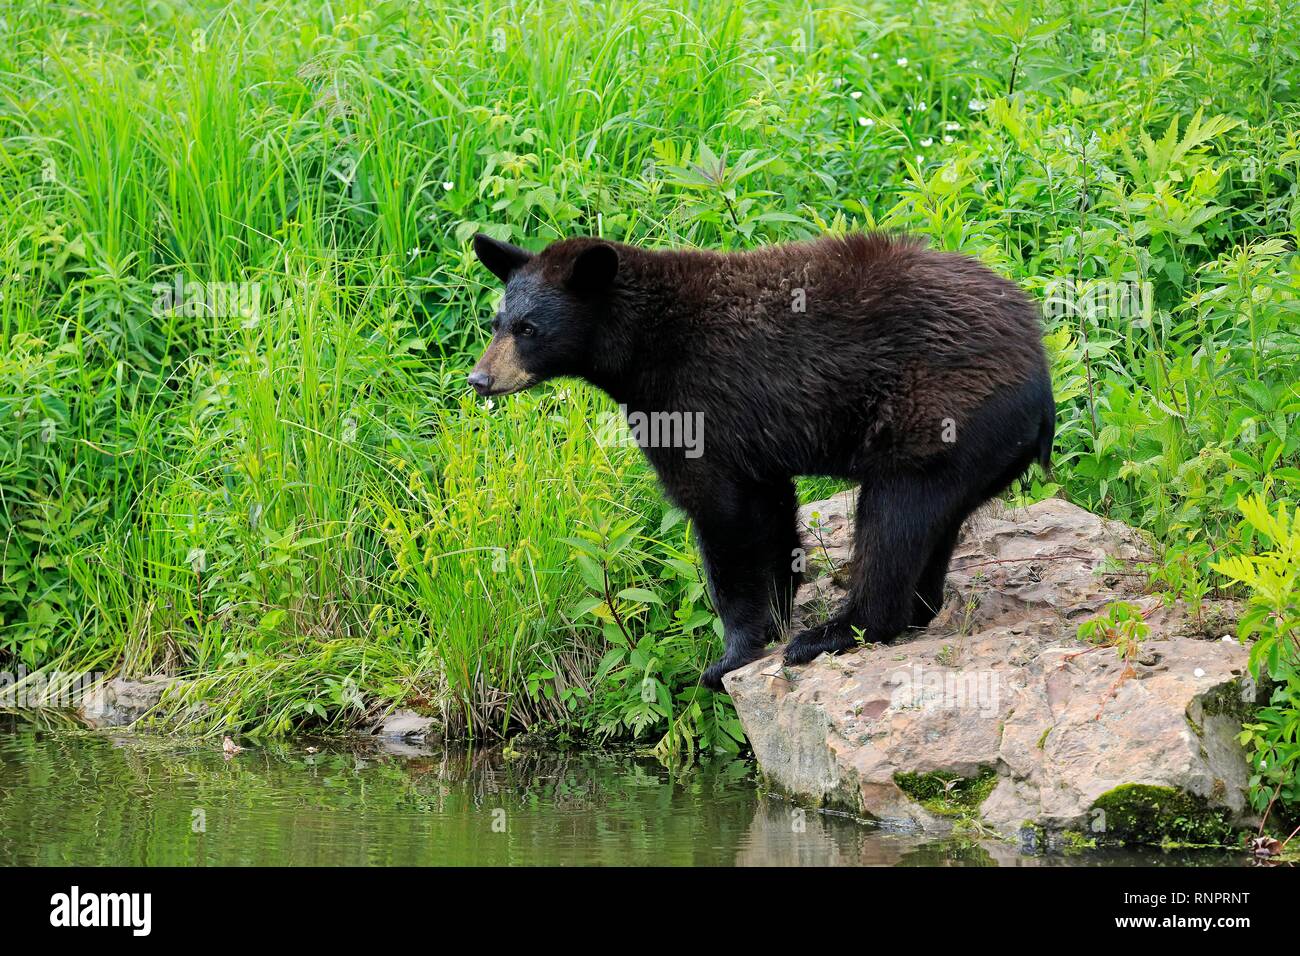 American Black Bear (Ursus americanus), young animal standing on rocks by the water, Pine County, Minnesota, USA Stock Photo